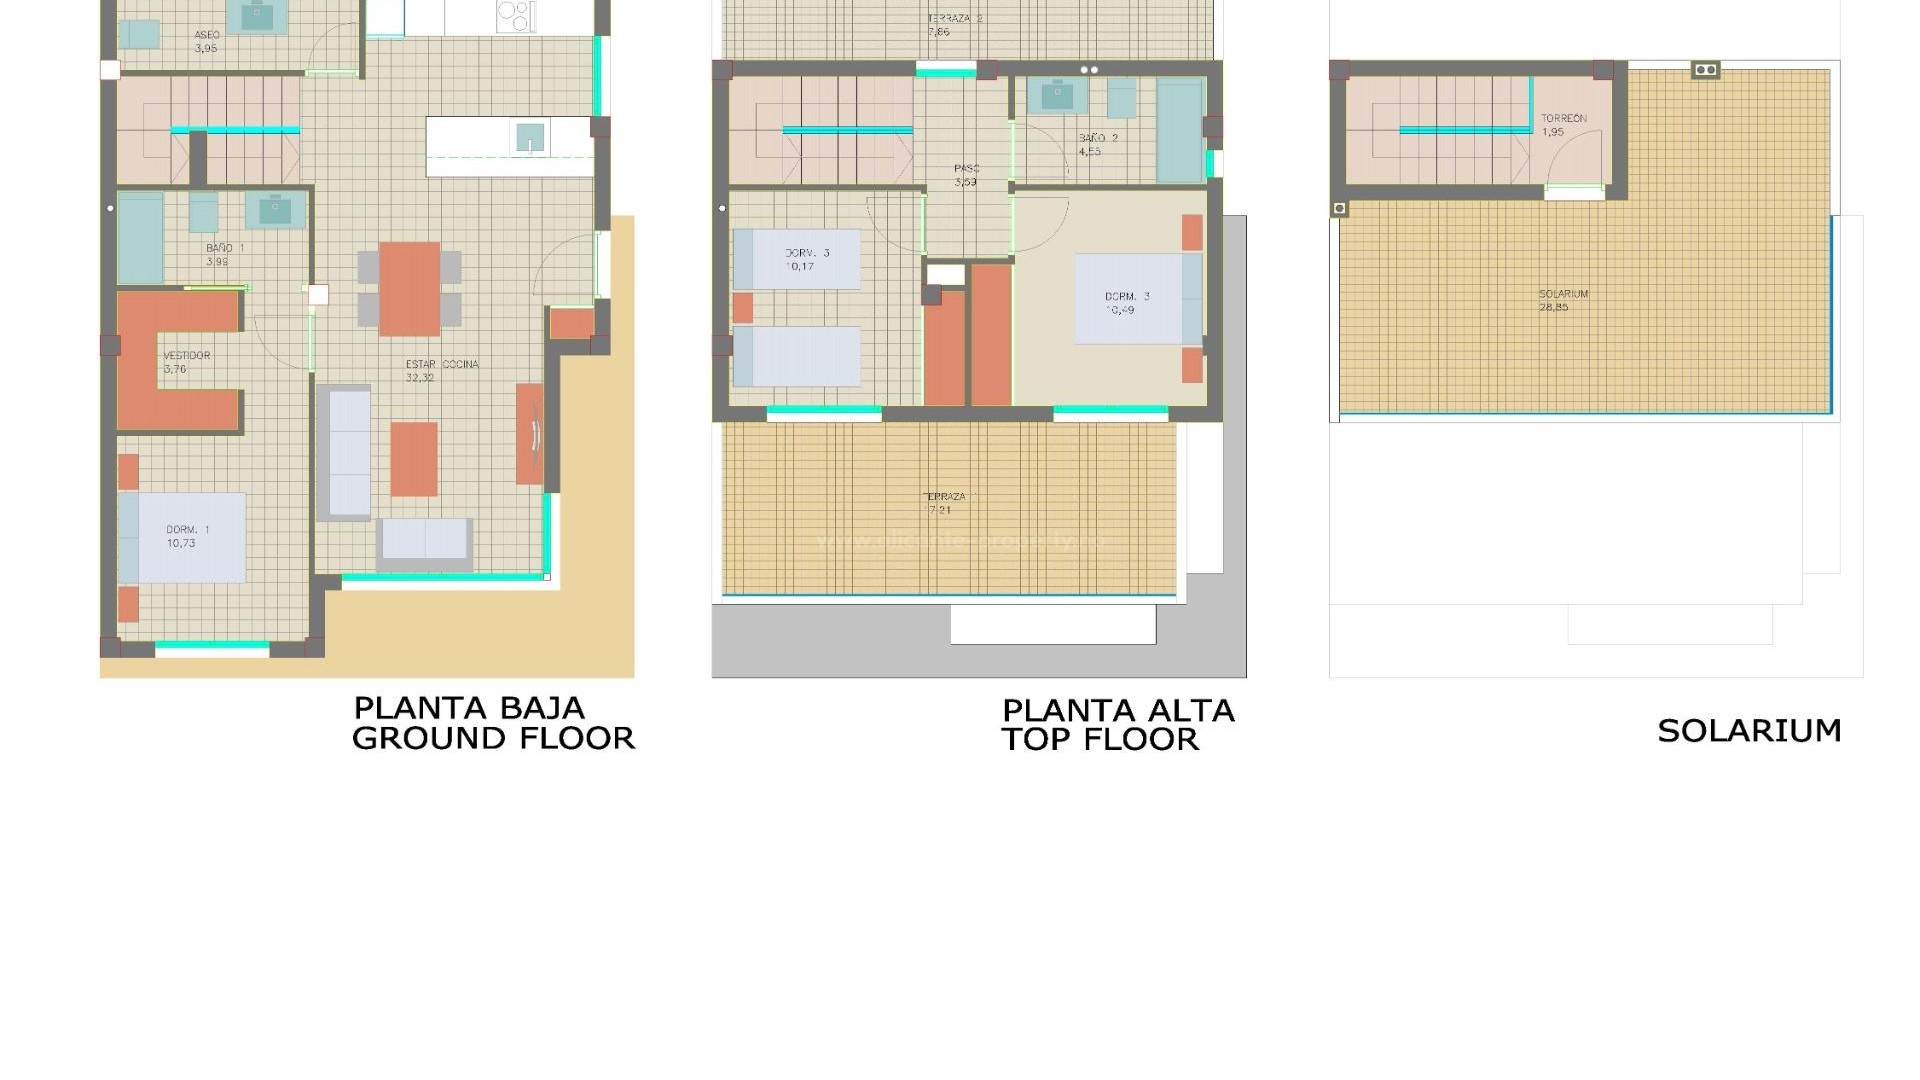 Brand new houses/villas in Pilar de La Horadada, 3 bedrooms, 2 bathrooms, garden with pool, terrace, solarium and basement with parking